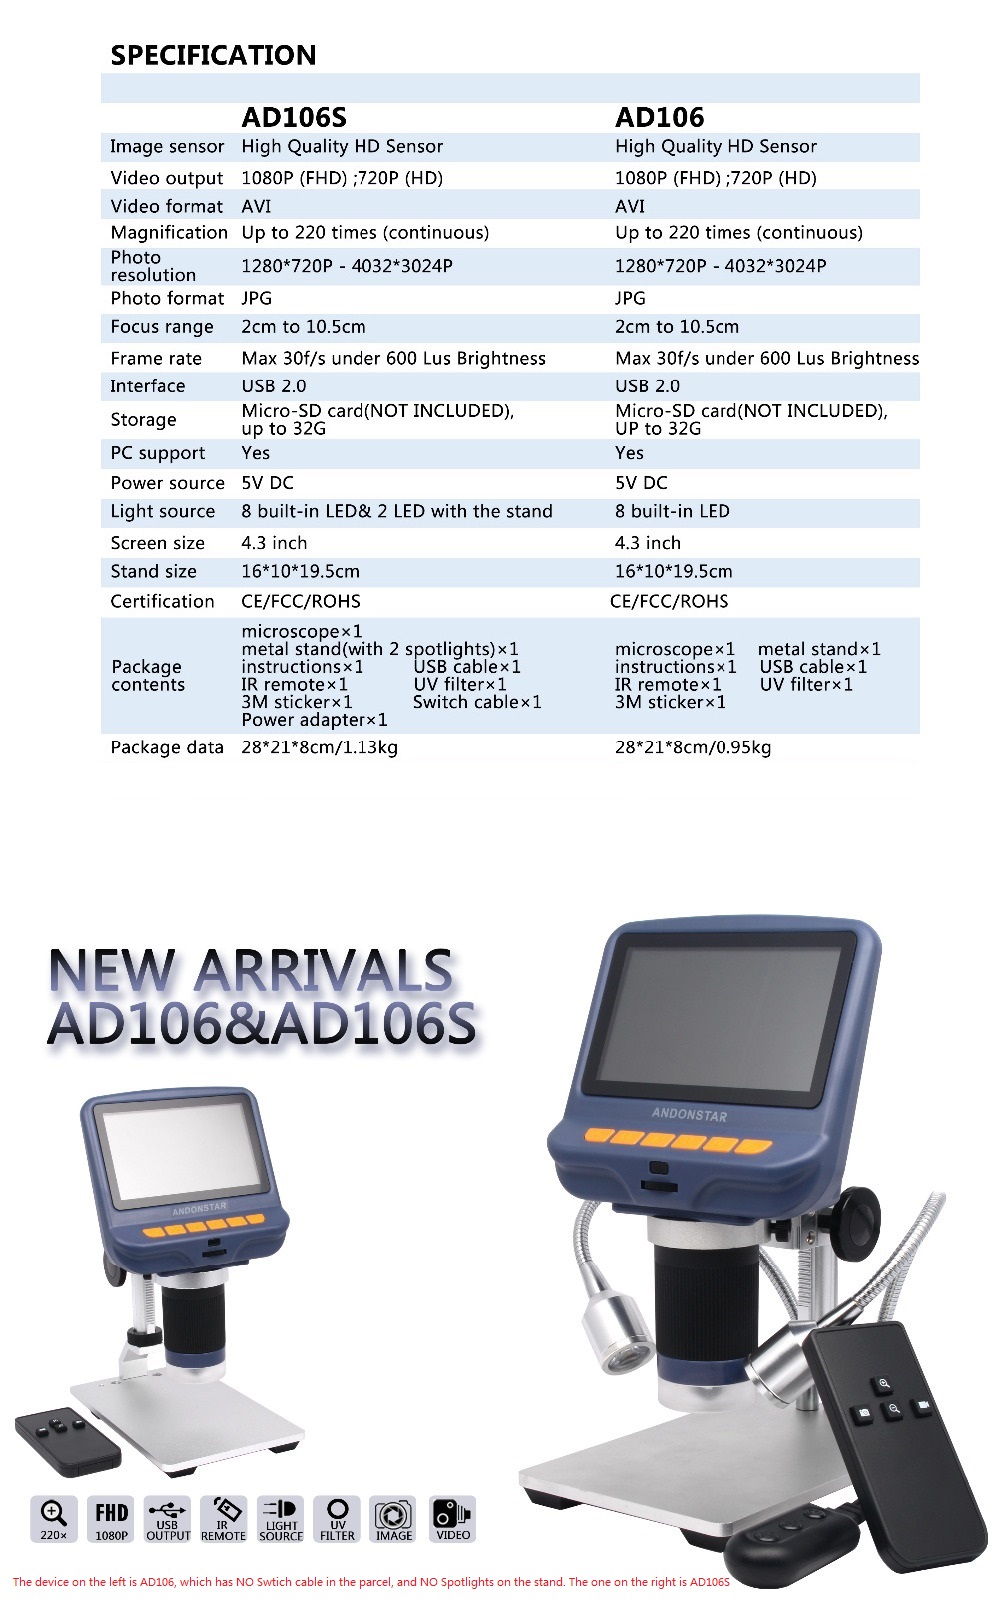 Andonstar-AD106S-Digital-Microscope-43-Inch--1080P-With-HD-Sensor-USB-Microscope-For-Phone-Repair-So-1354103-1